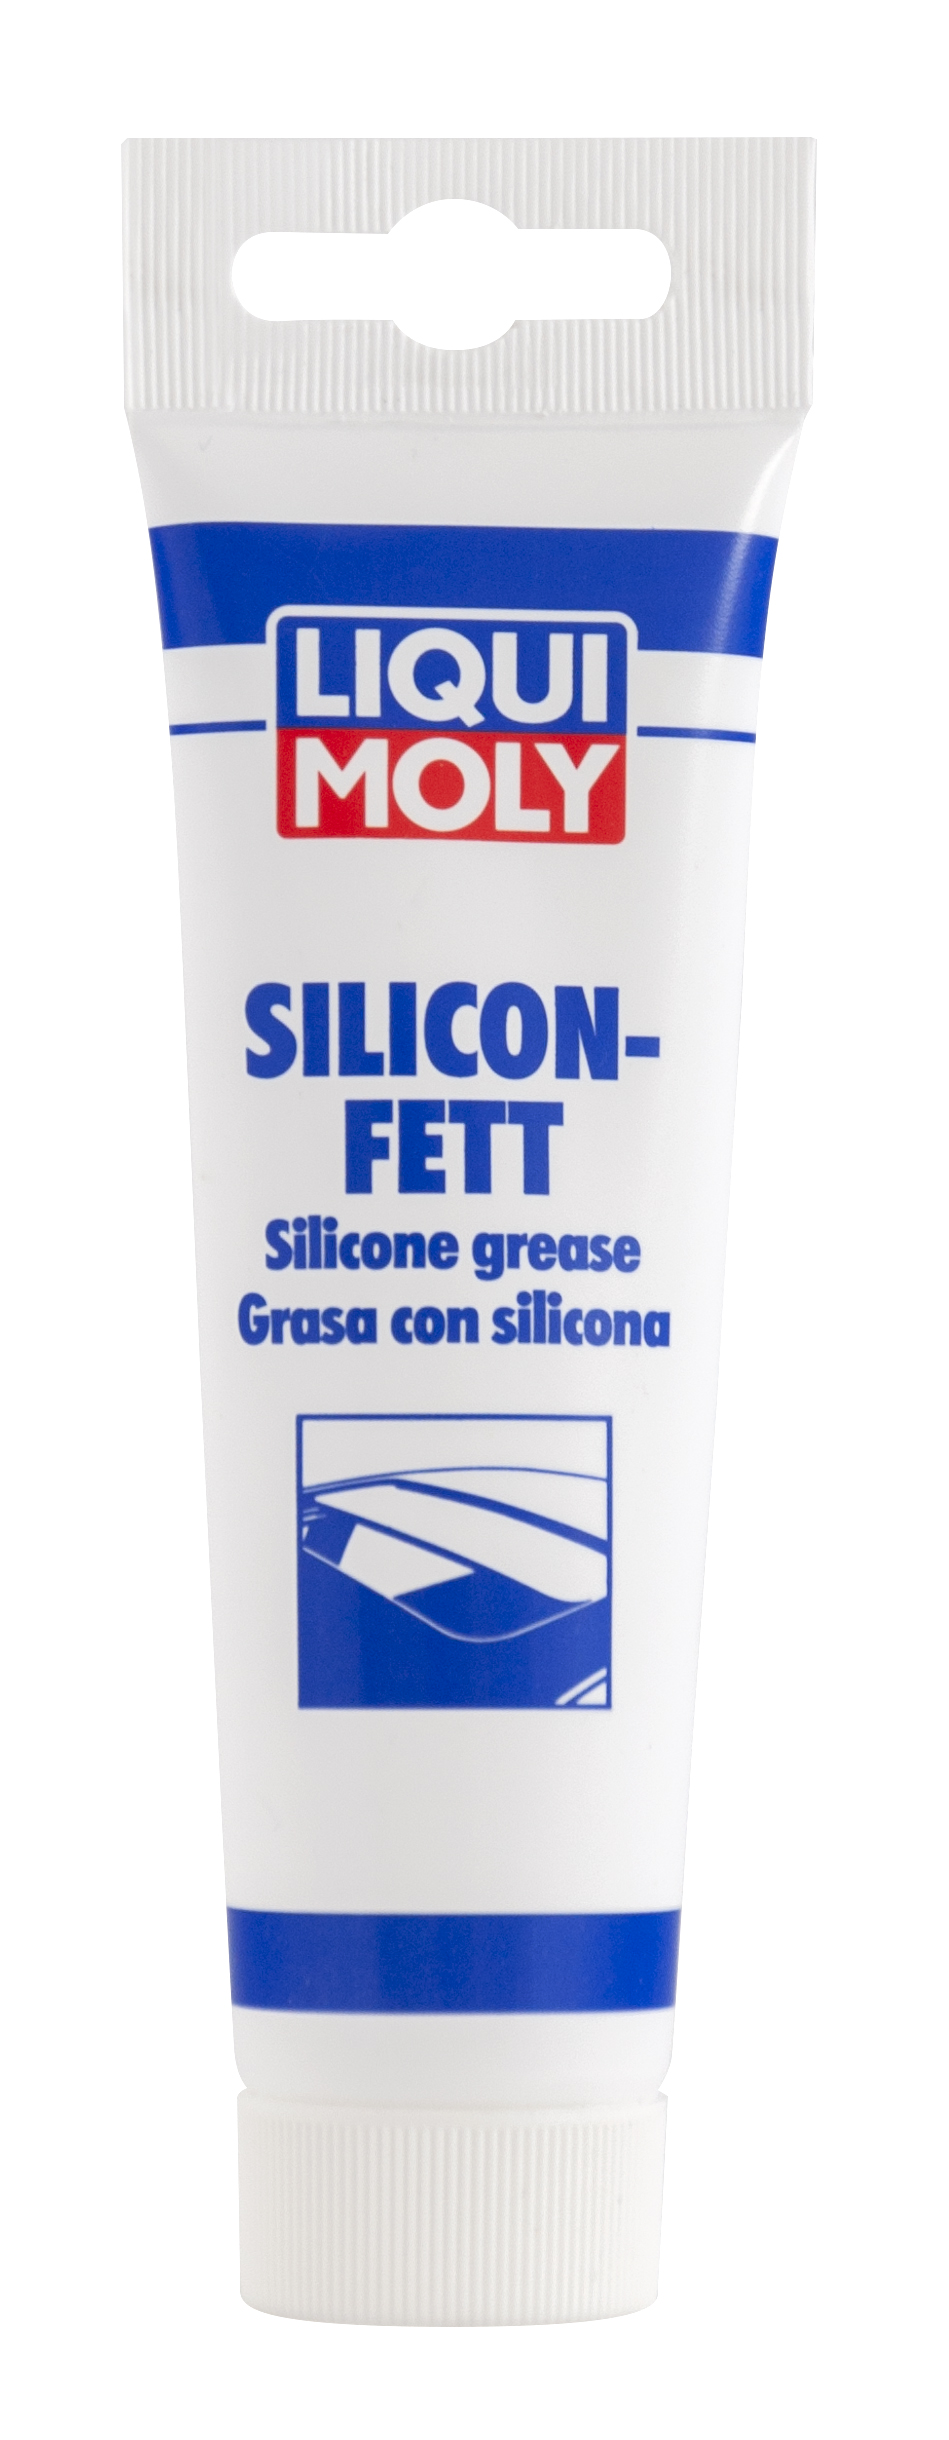 Silicon-Fett (силиконовая смазка)